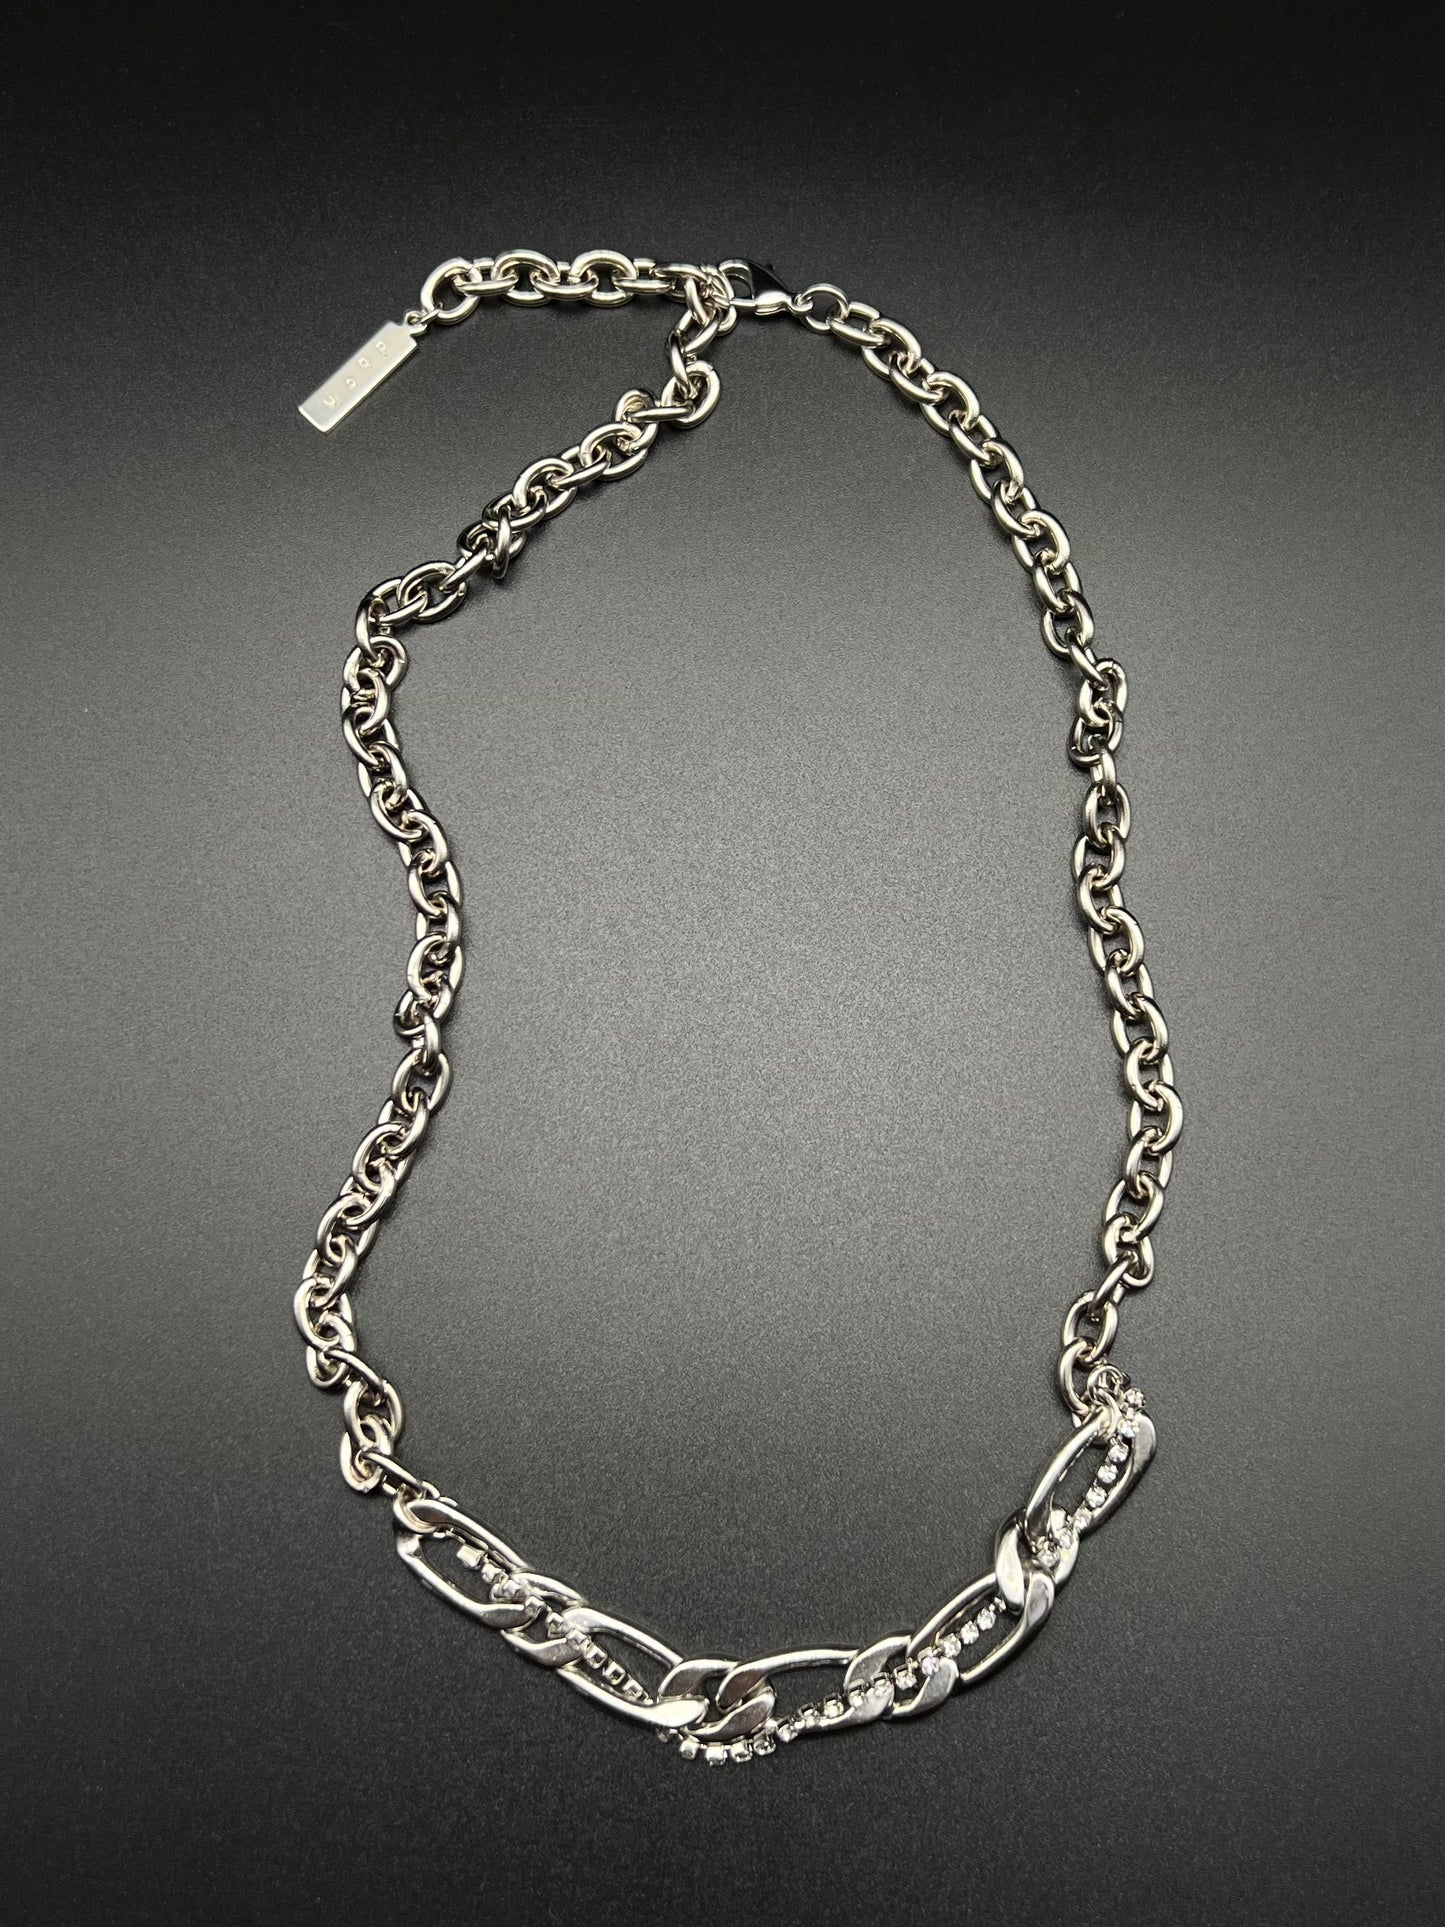 1111Chain bijou necklace - Silver